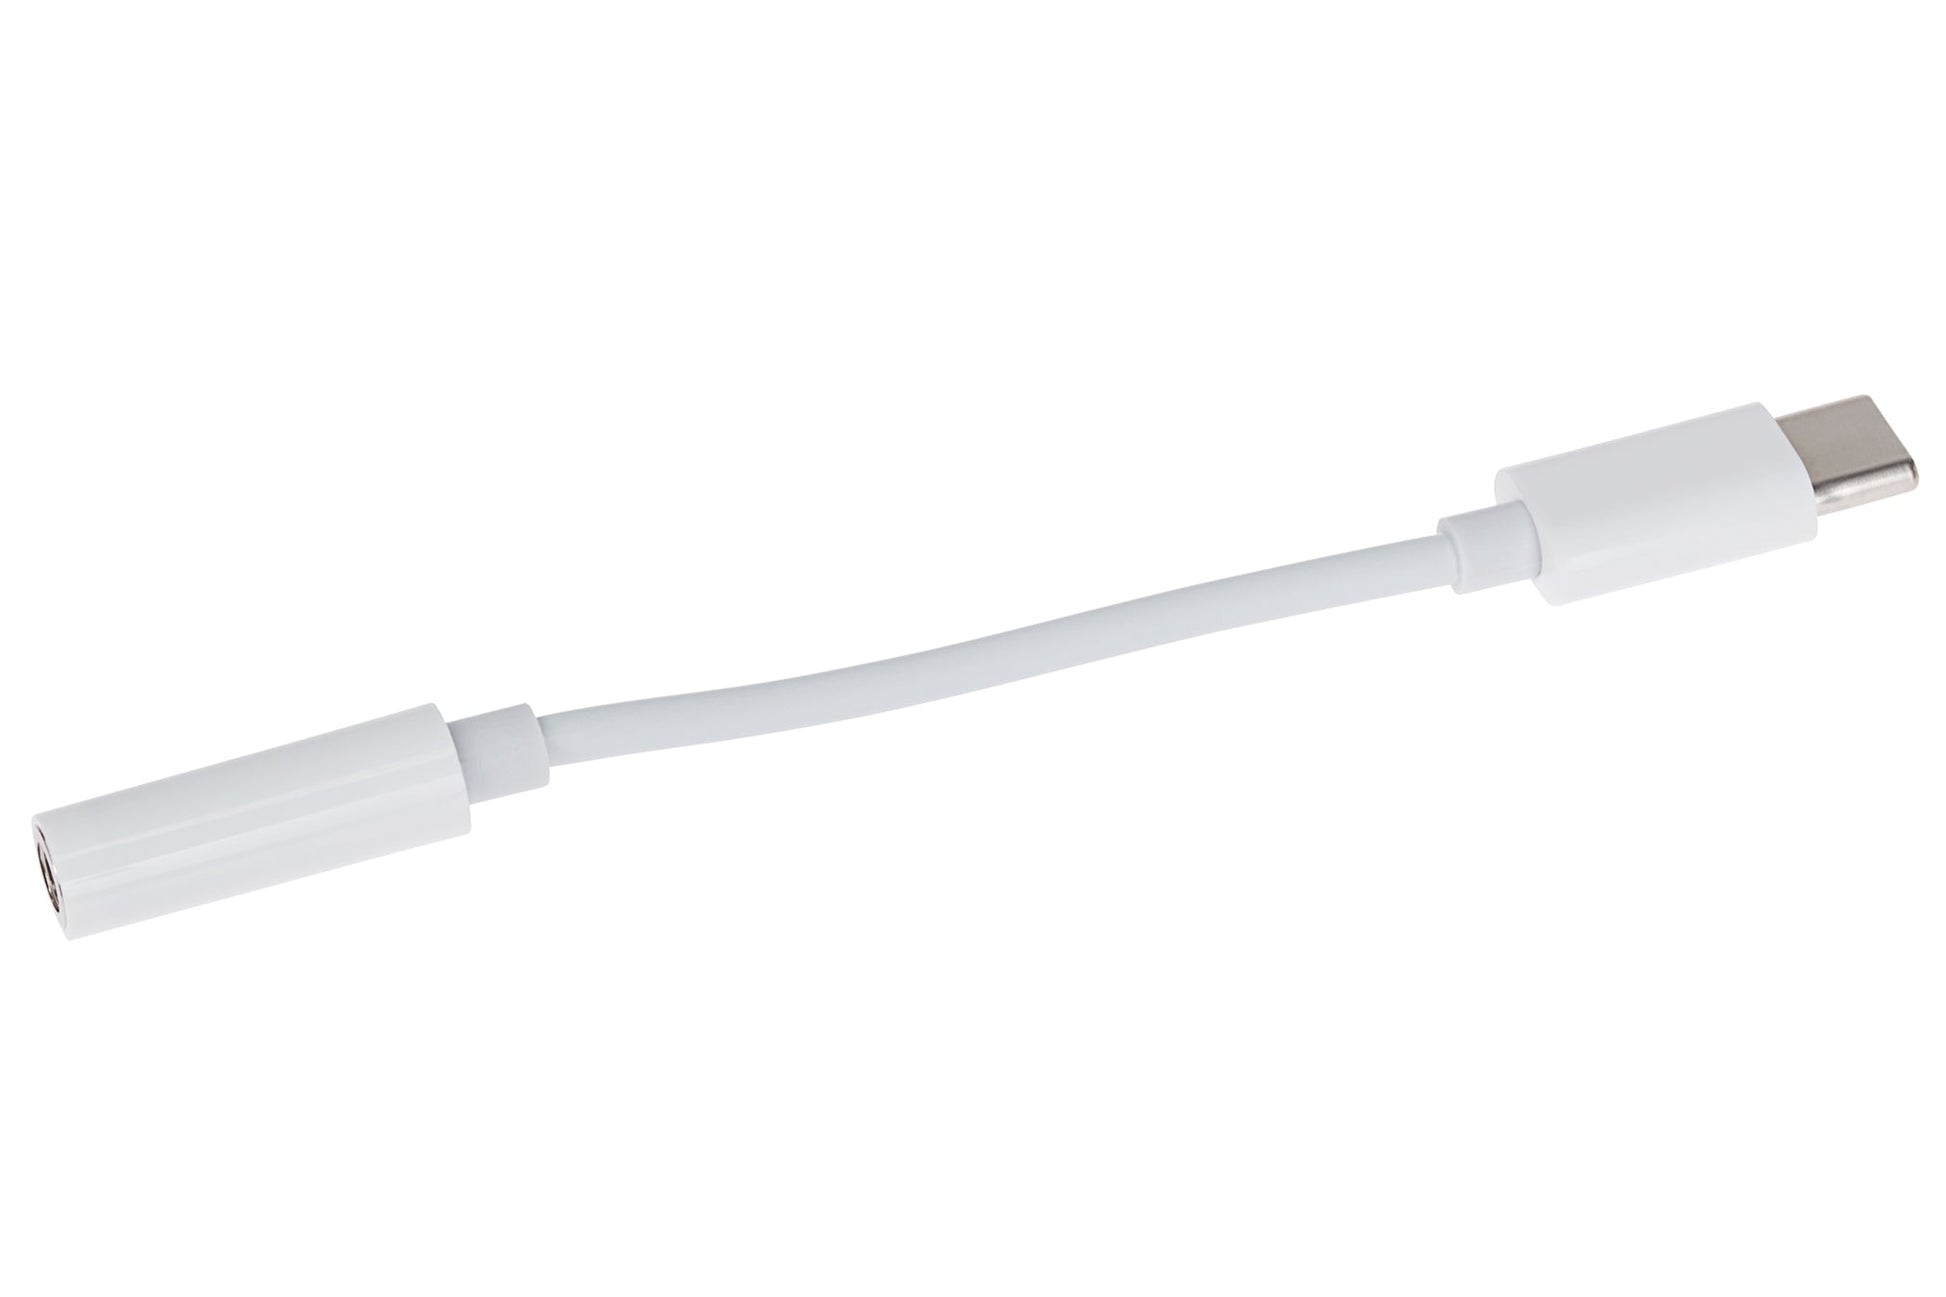 Nikkai USB-C to 3.5mm Female Jack Headphone Adapter - White, 5cm - maplin.co.uk